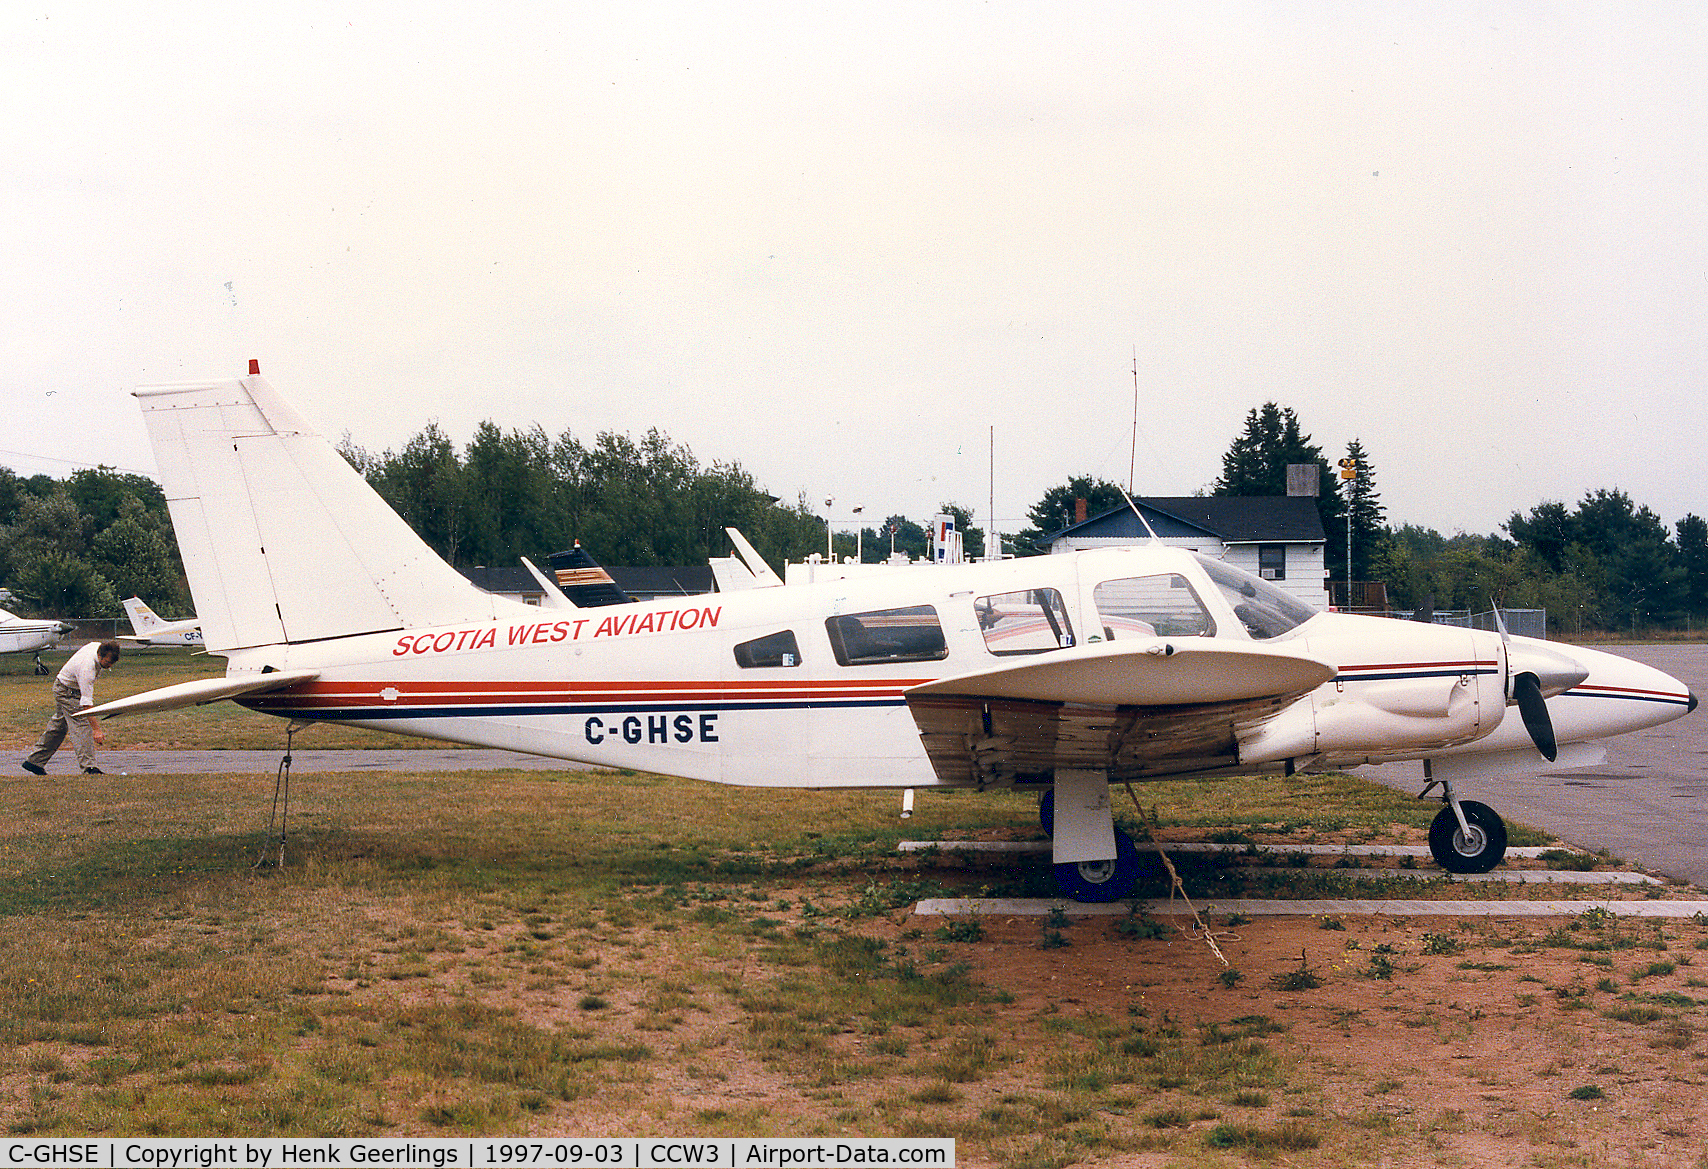 C-GHSE, 1974 Piper PA-34-200 C/N 34-7450189, Scotia West Aviation

King County Municipal Airport, Nova Scotia